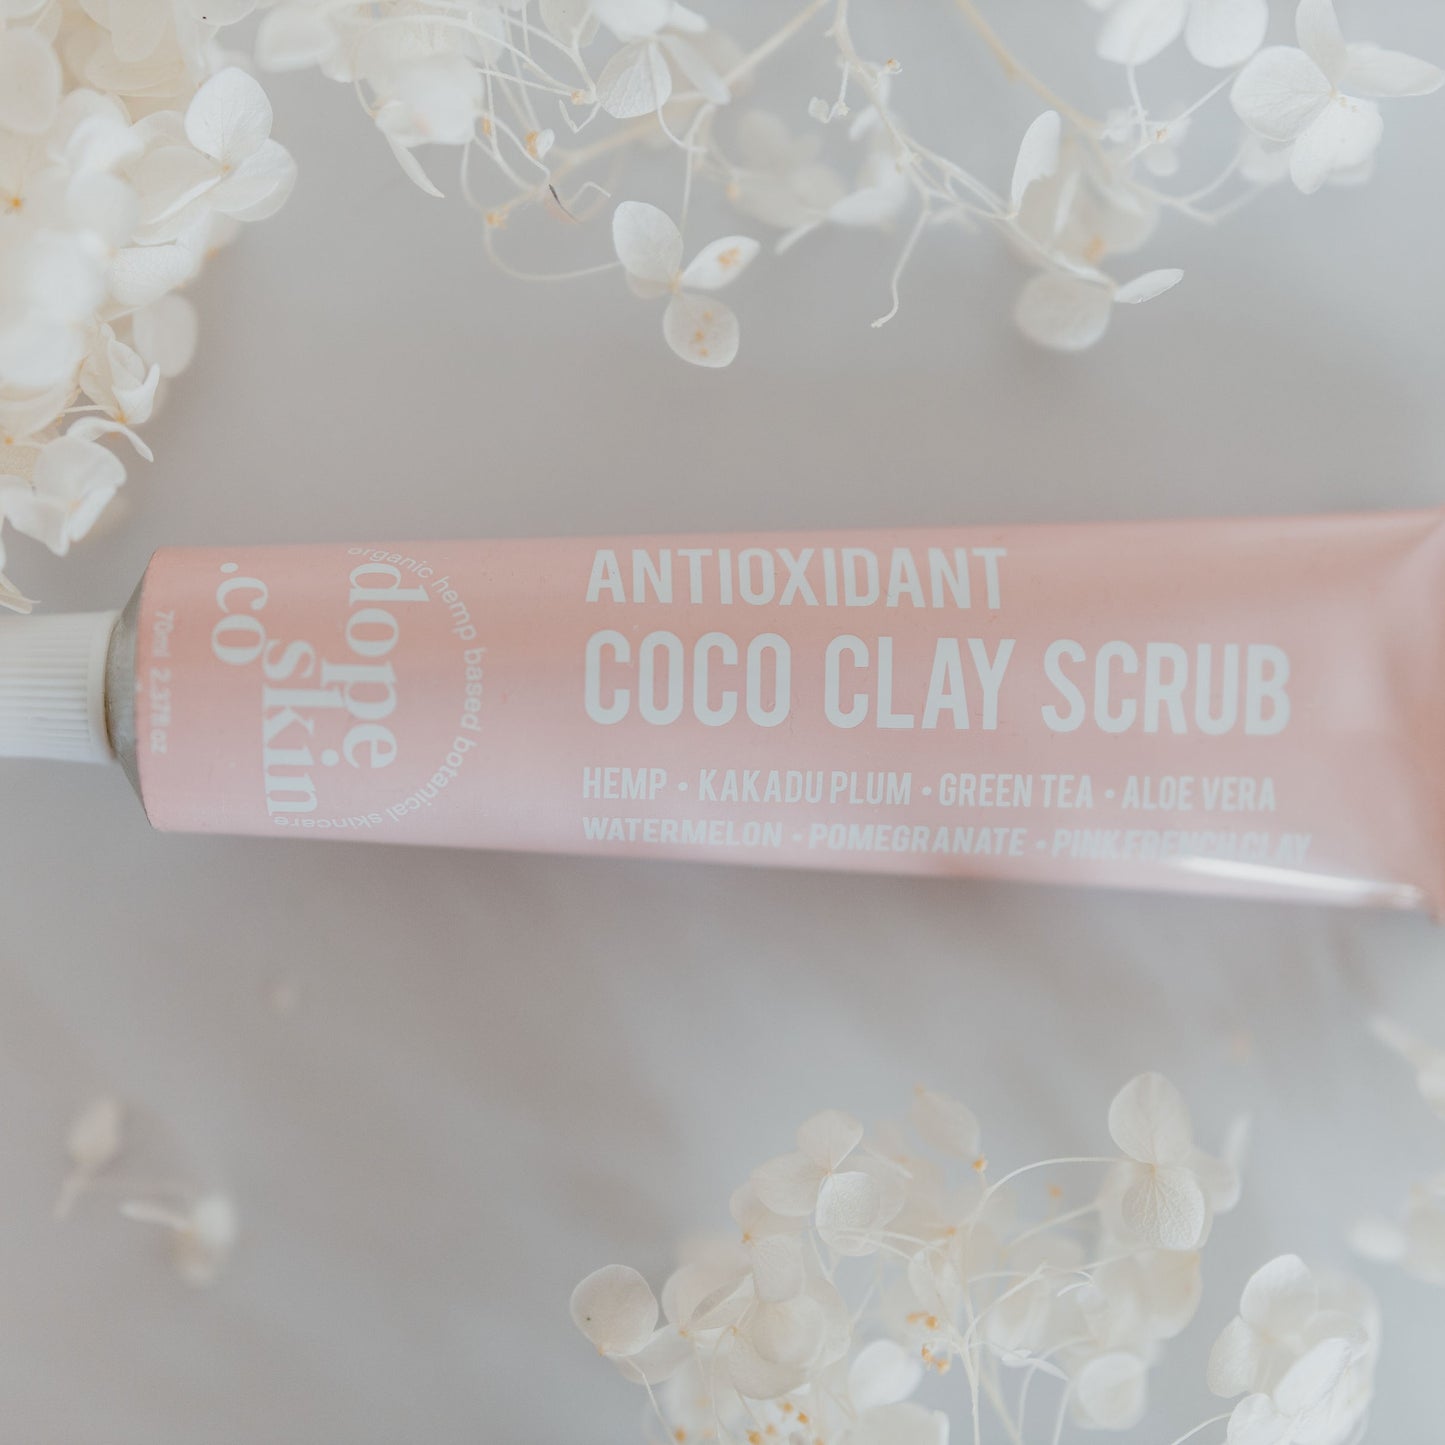 Coco Clay Scrub - Antioxidant (dopeskin.co)